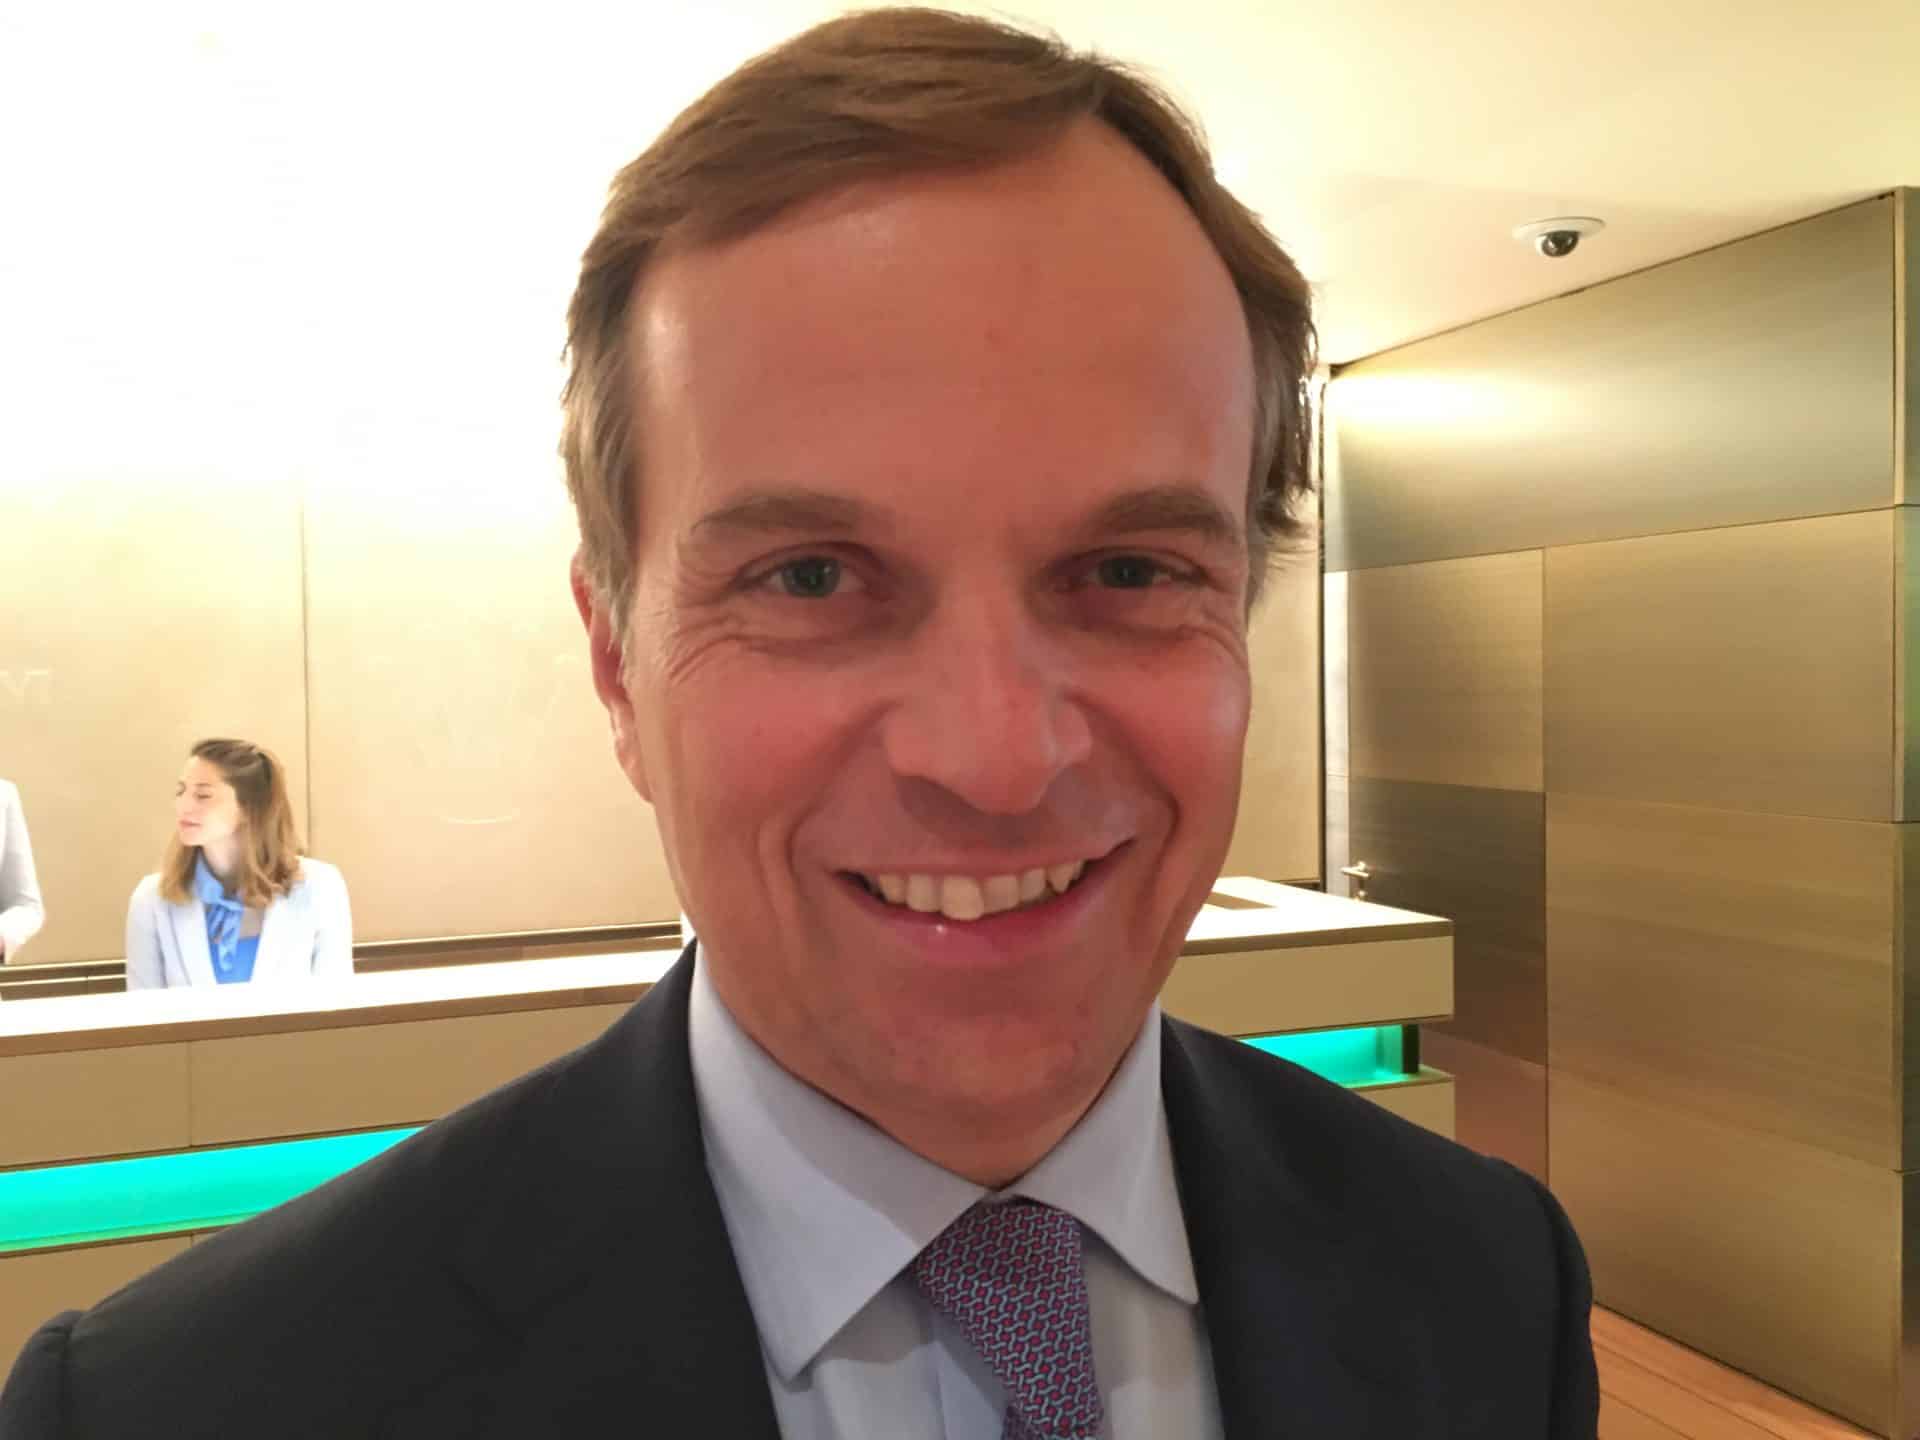  Jean-Frédéric Dufour, seit Juni 2015 CEO von Rolex CEO